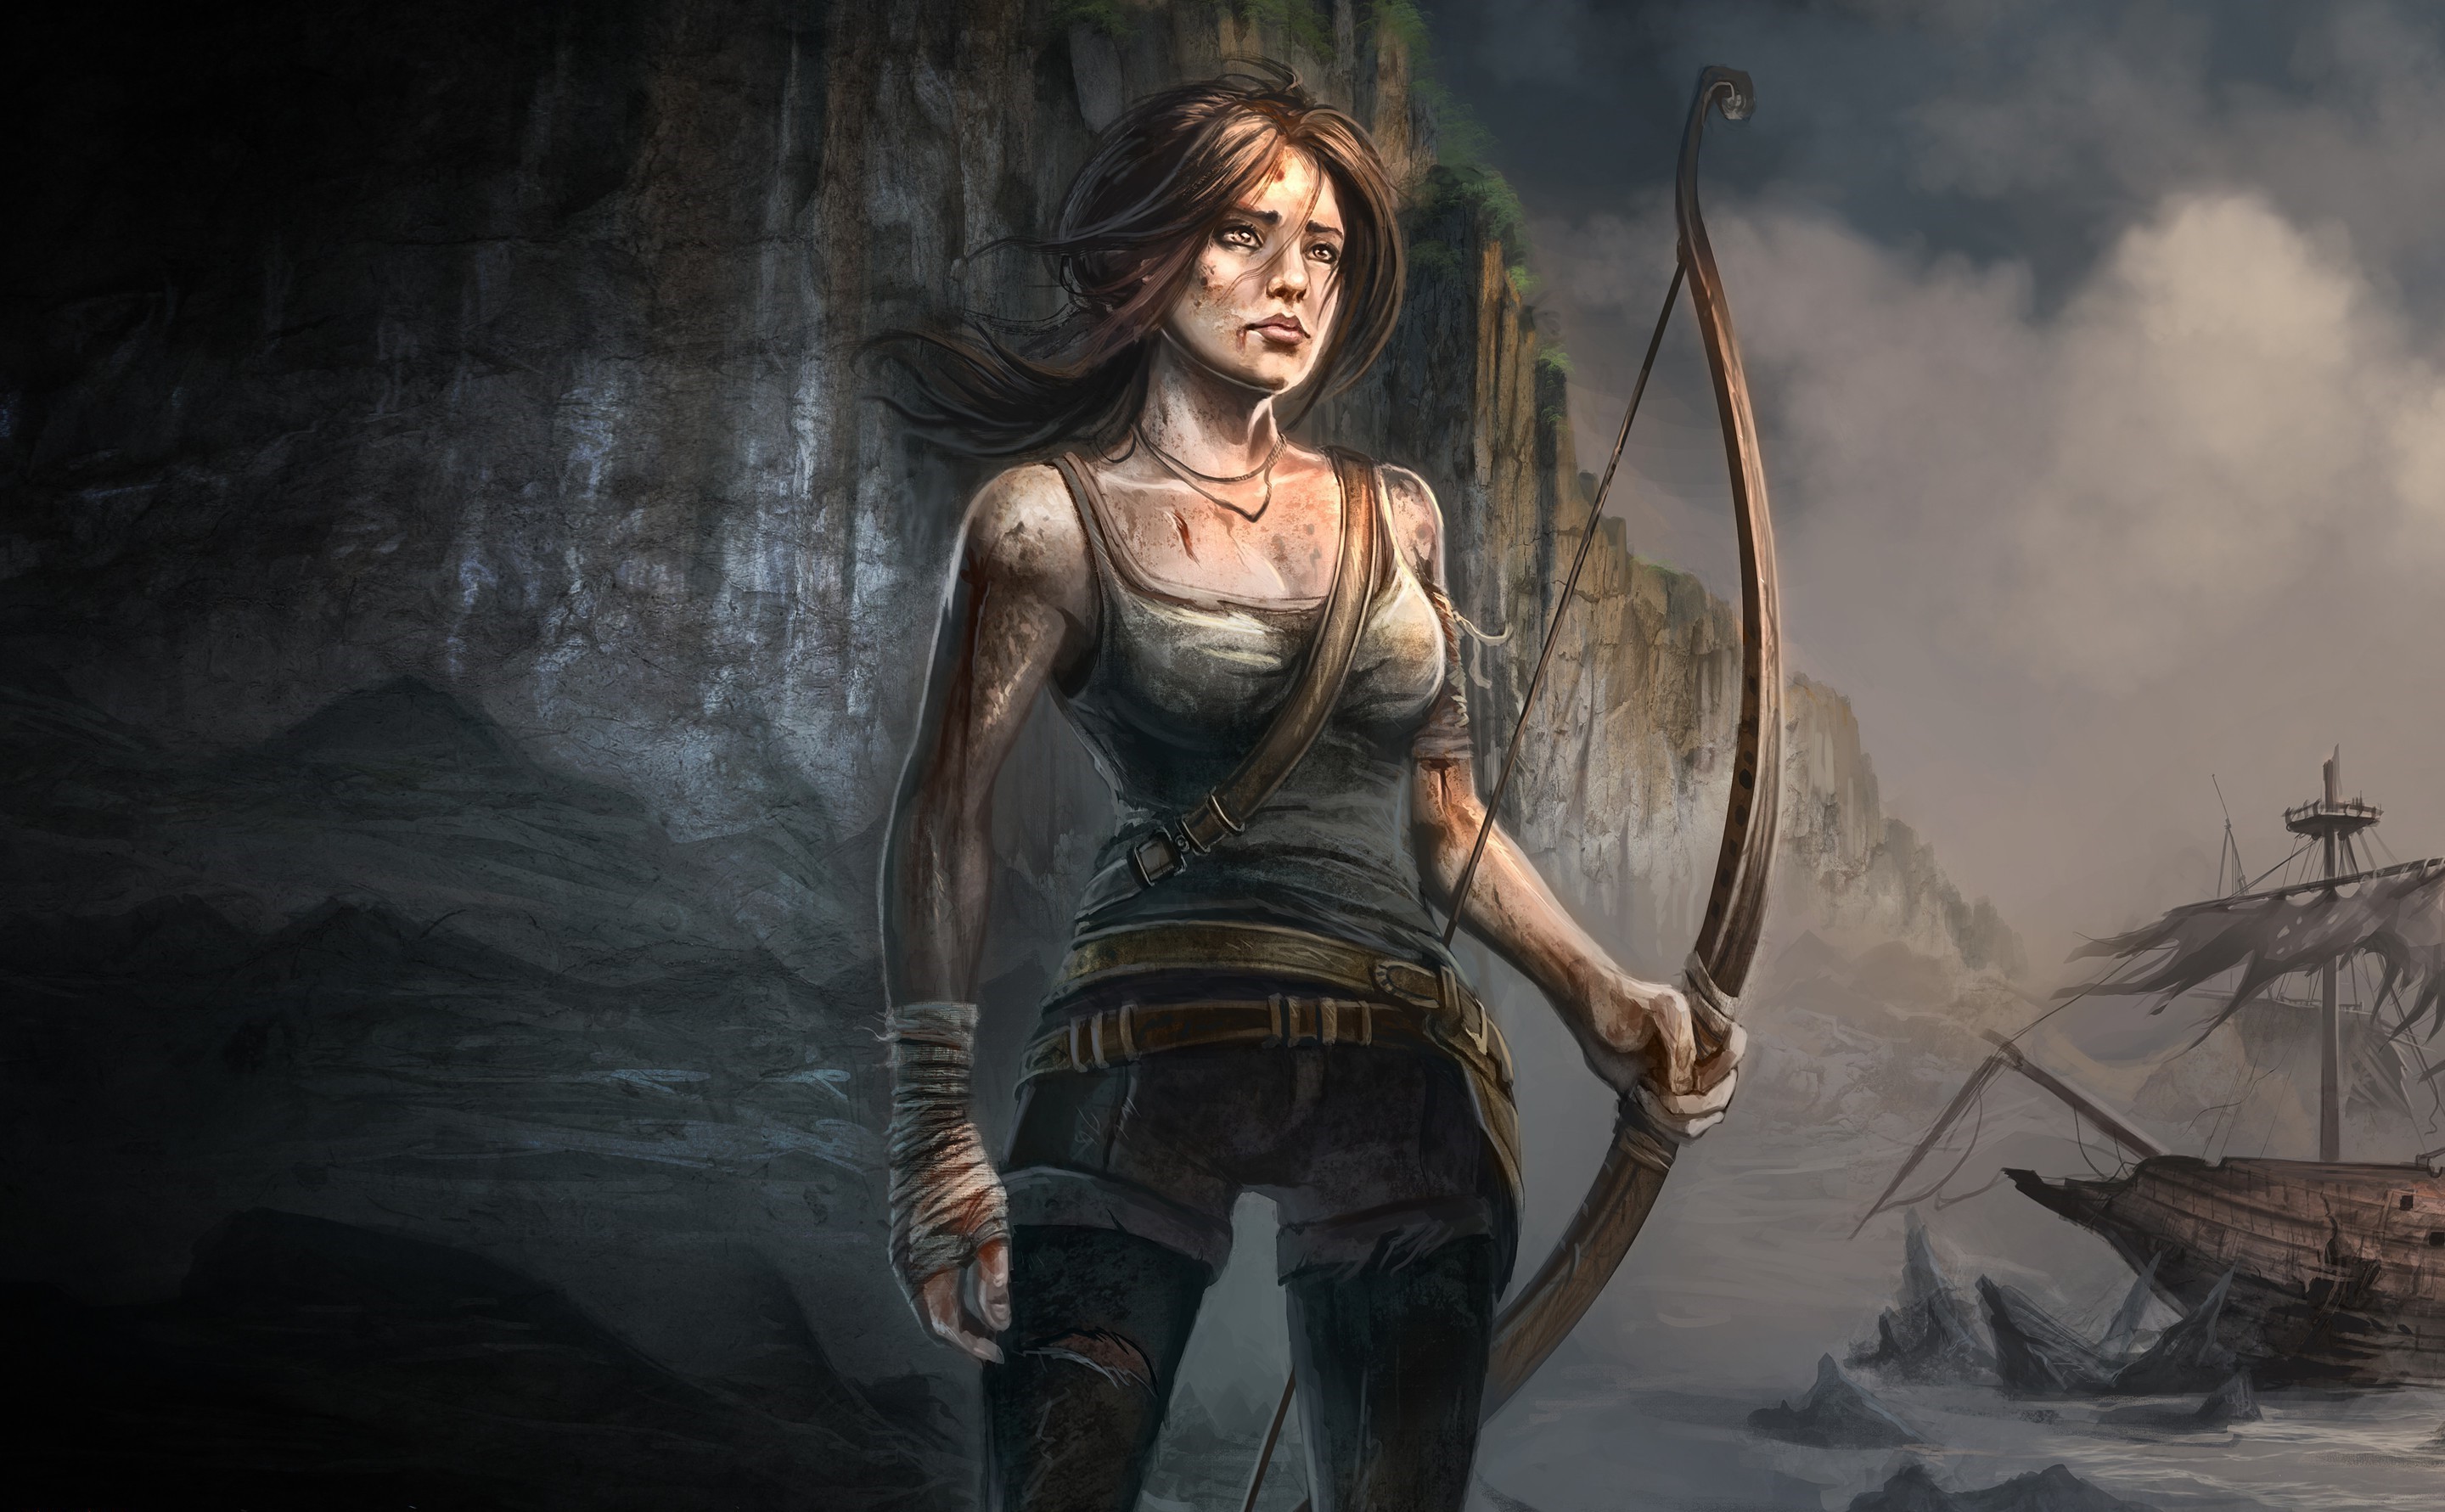 Lara Croft Game